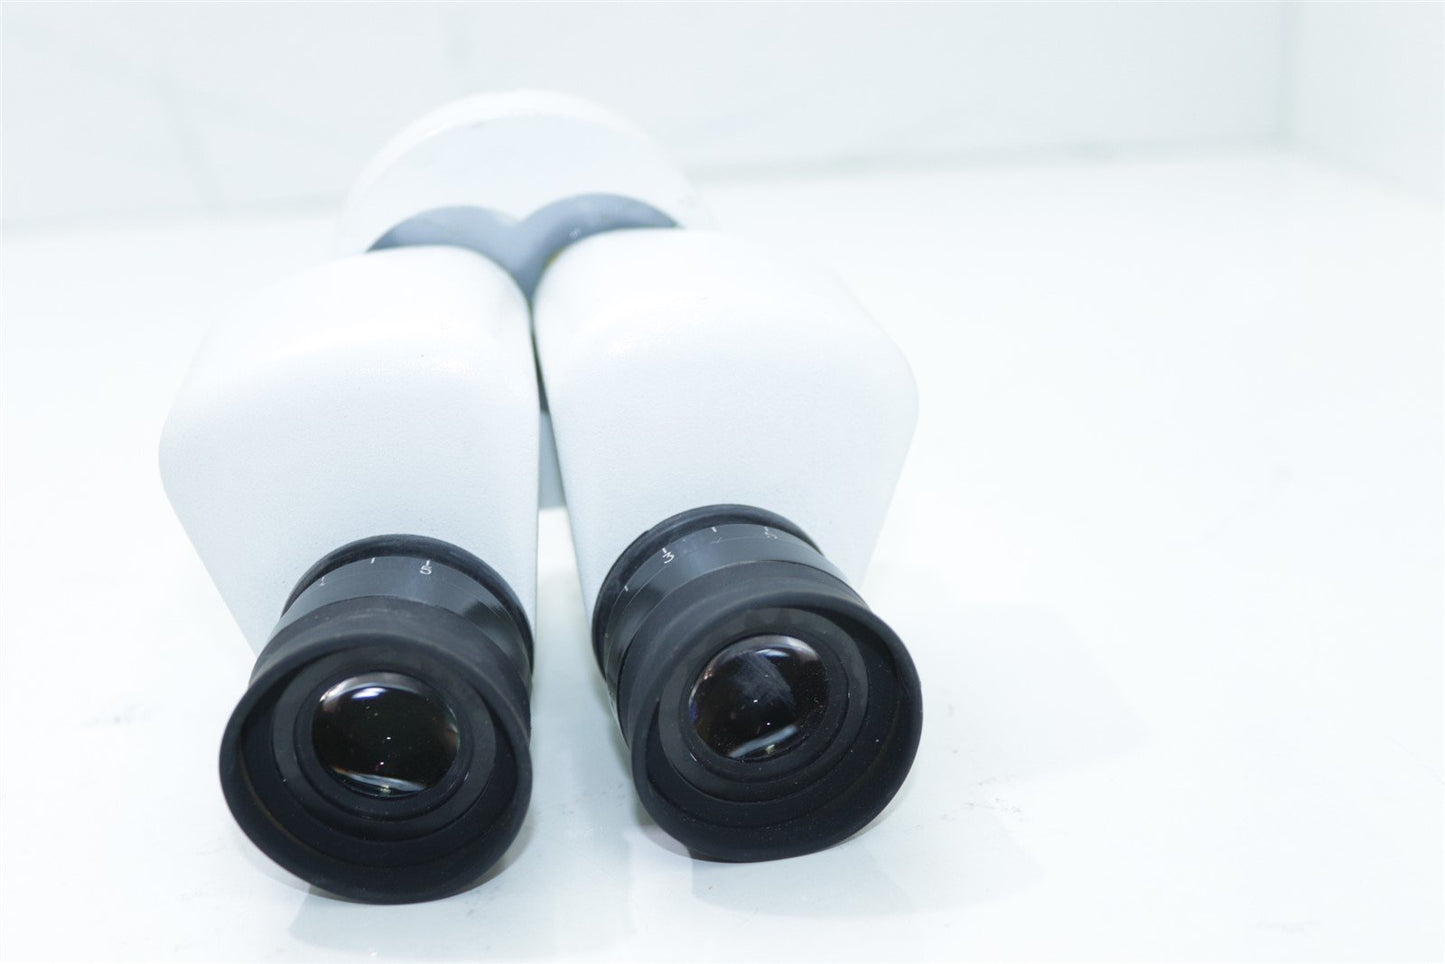 Lumenis Binocular Eyepiece Microscope Head For Eye Examination Slit Lamp